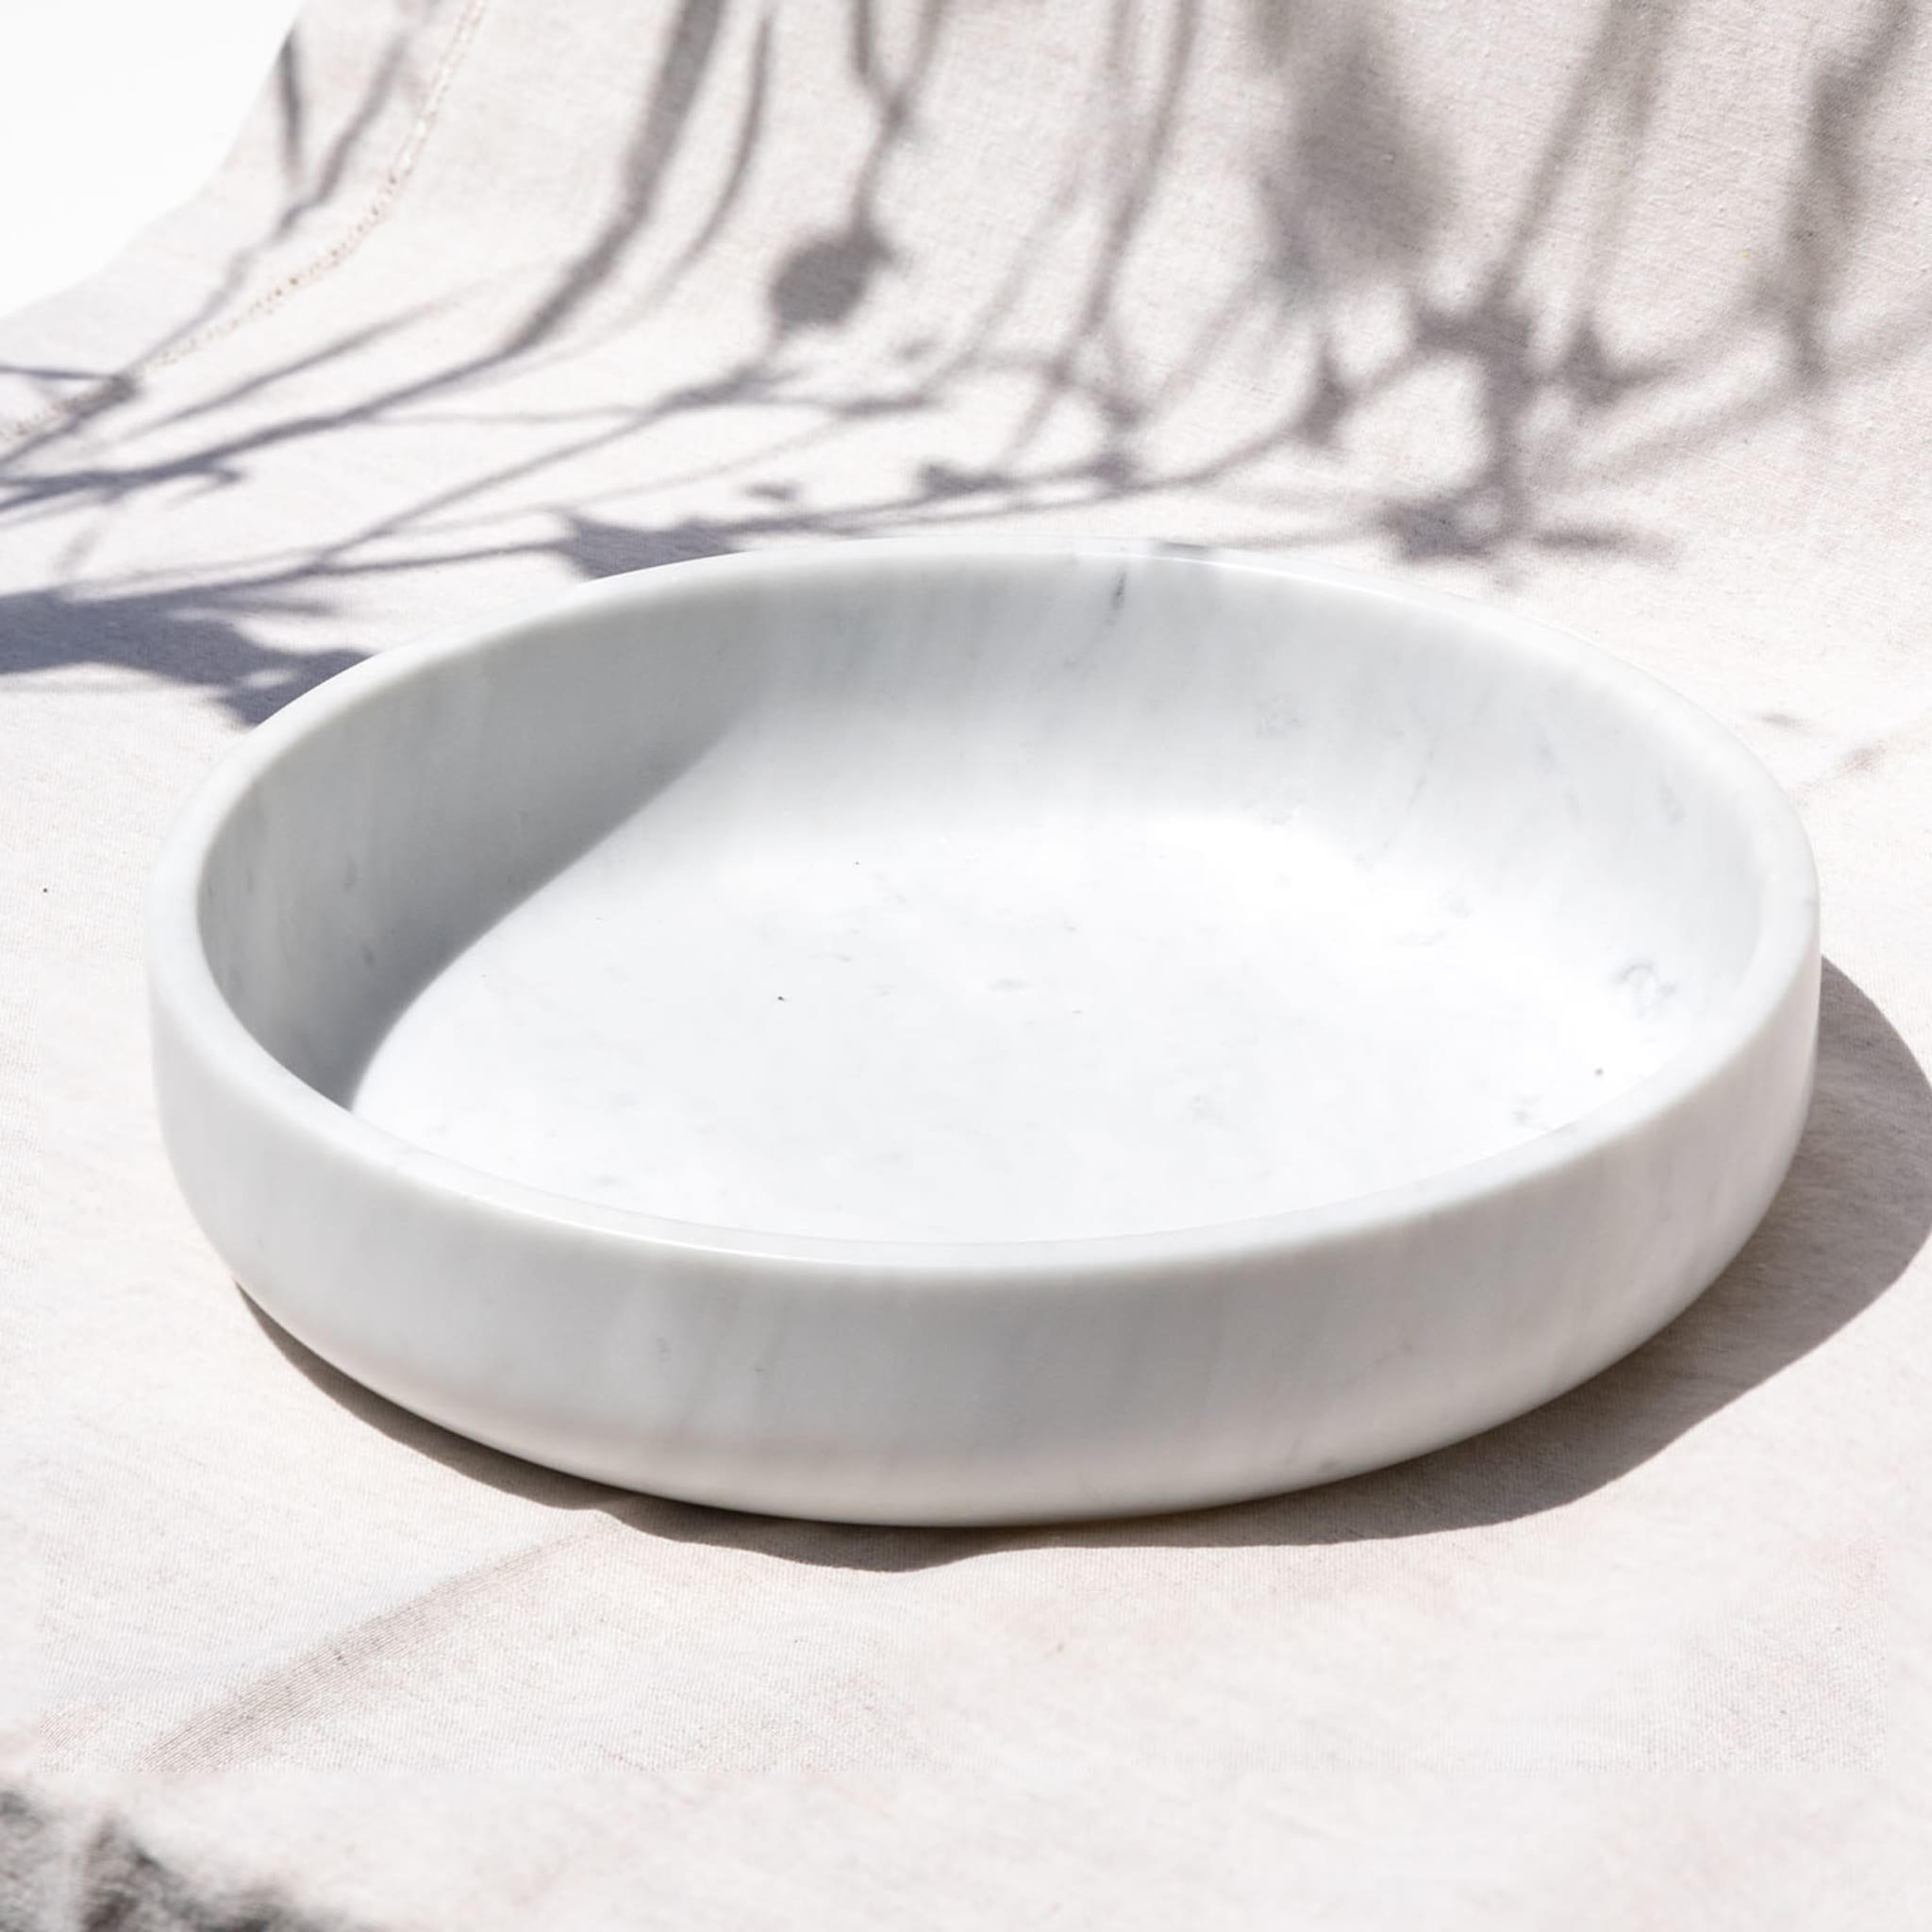 Diogenea - A Tale of Bowls White Carrara Bowl - Alternative view 1